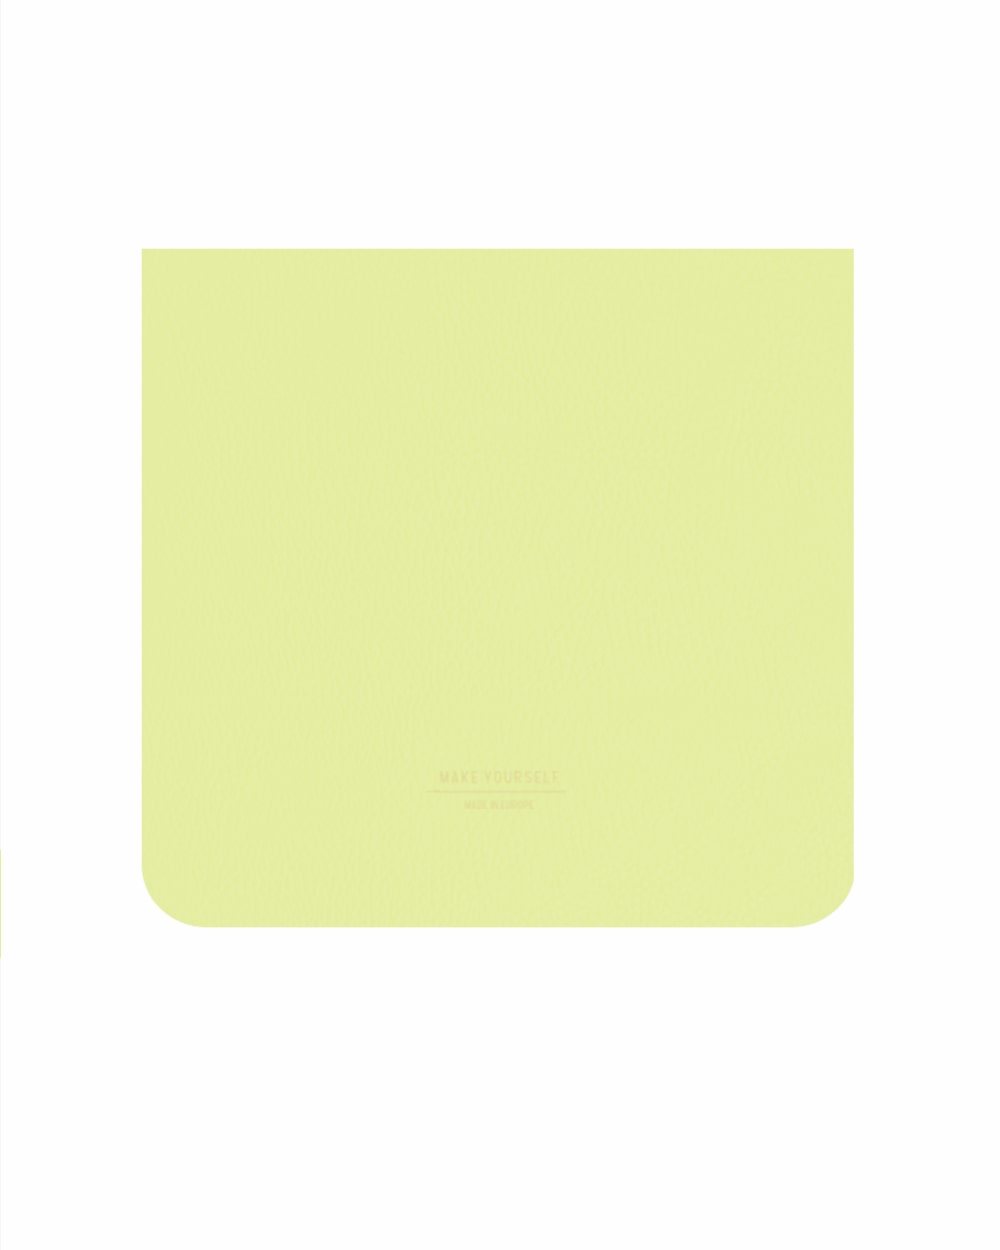 KLAPA square yellow 1